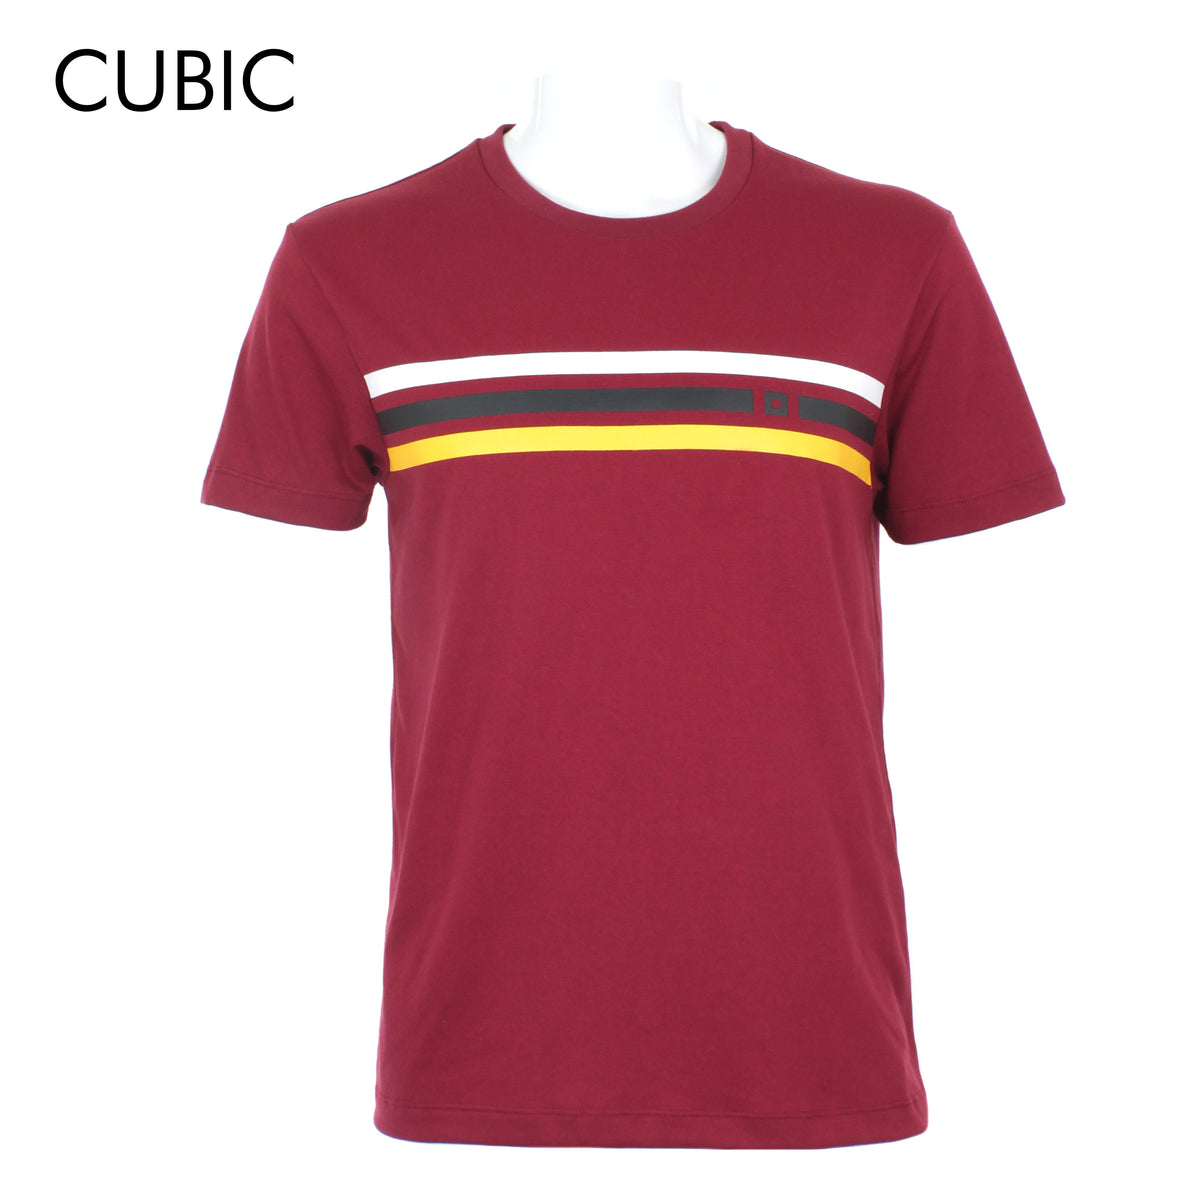 Cubic Men Round Neck Tees T-shirt Jersey Shirt Top Top for Men - CMJ2313R